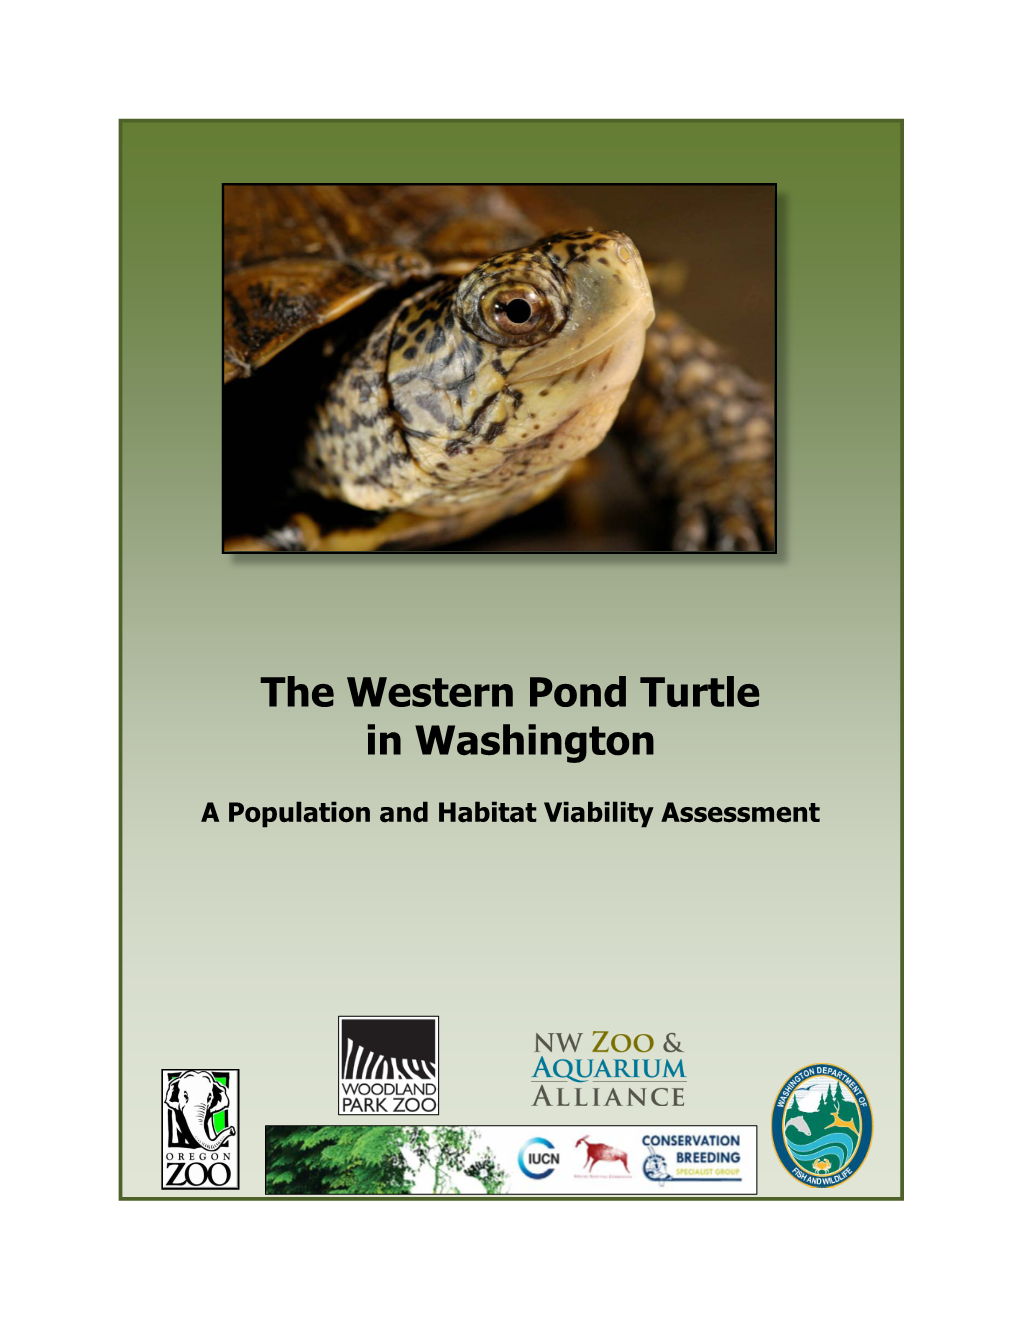 The Western Pond Turtle in Washington